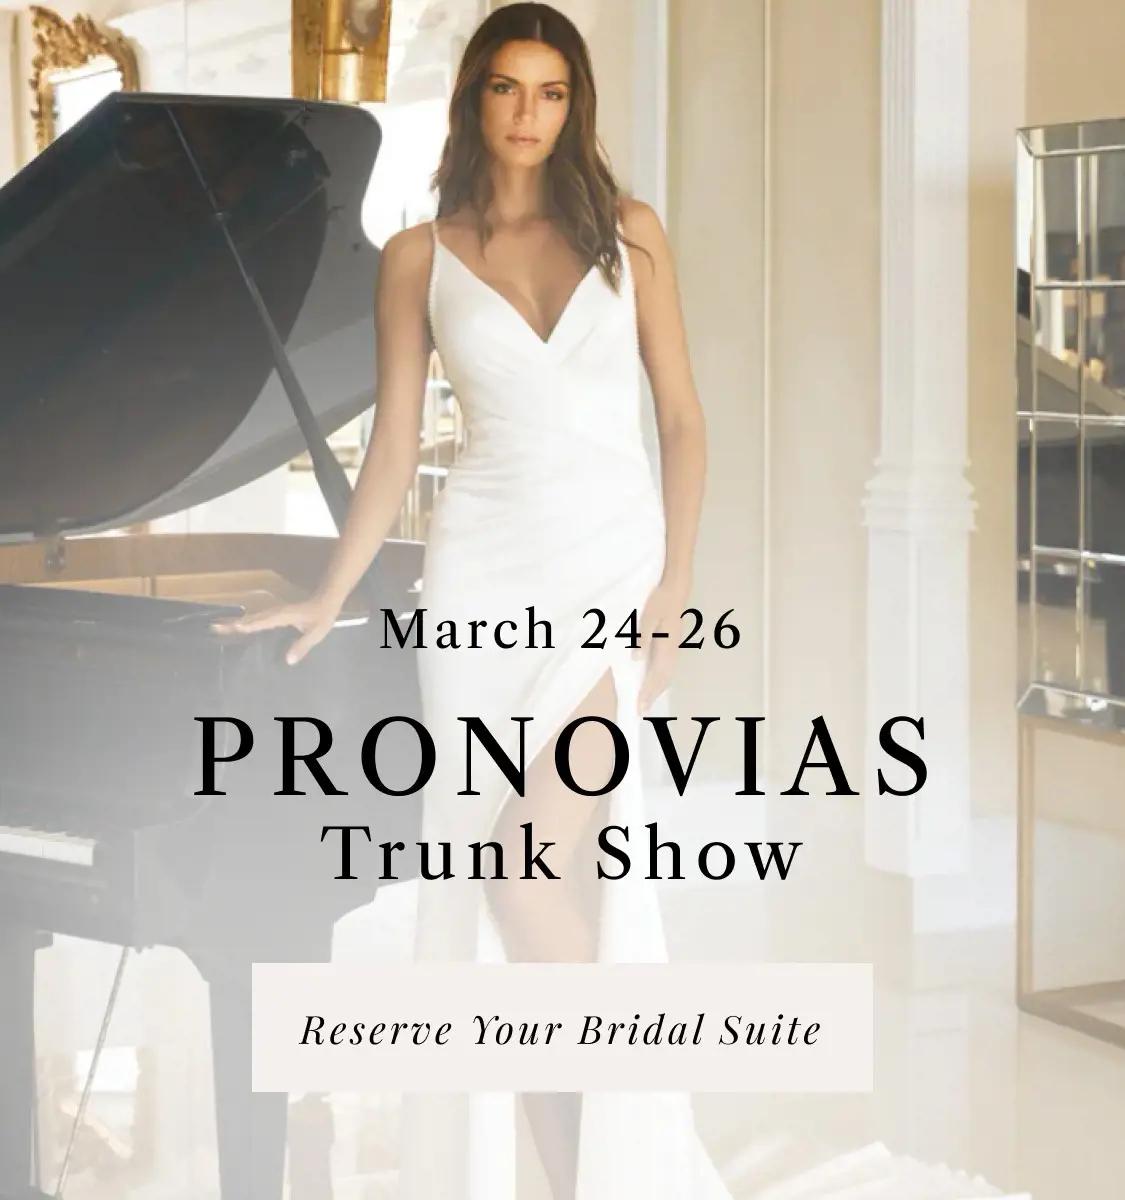 "Pronovias Trunk Show" banner for mobile